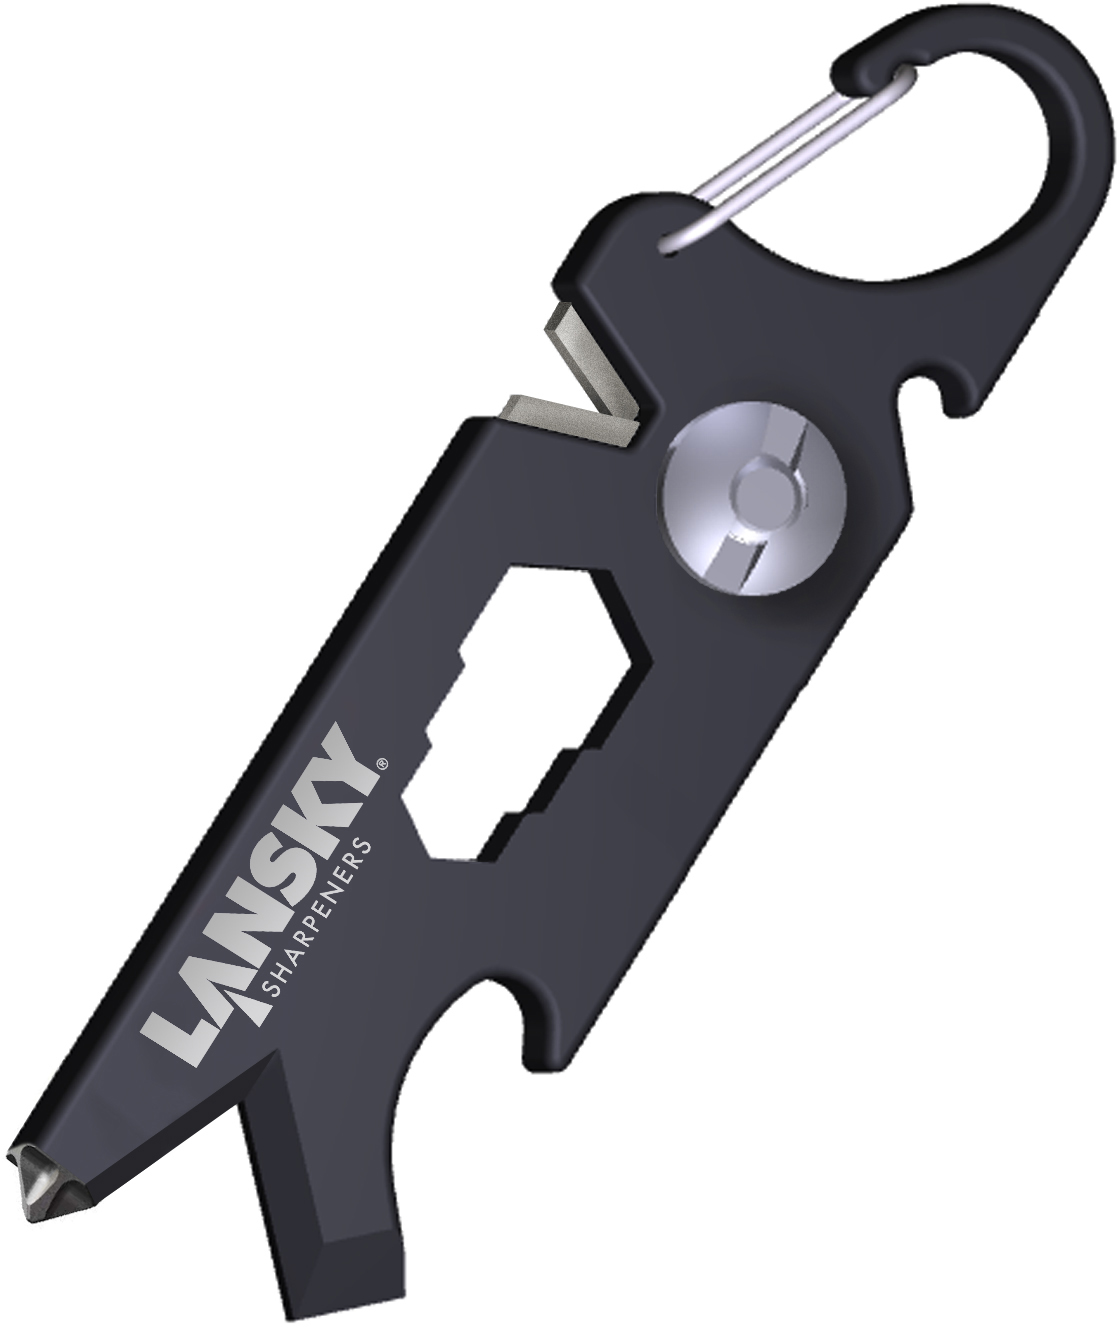 Lansky Universal Knife Sharpening System Bench Mount Aluminum